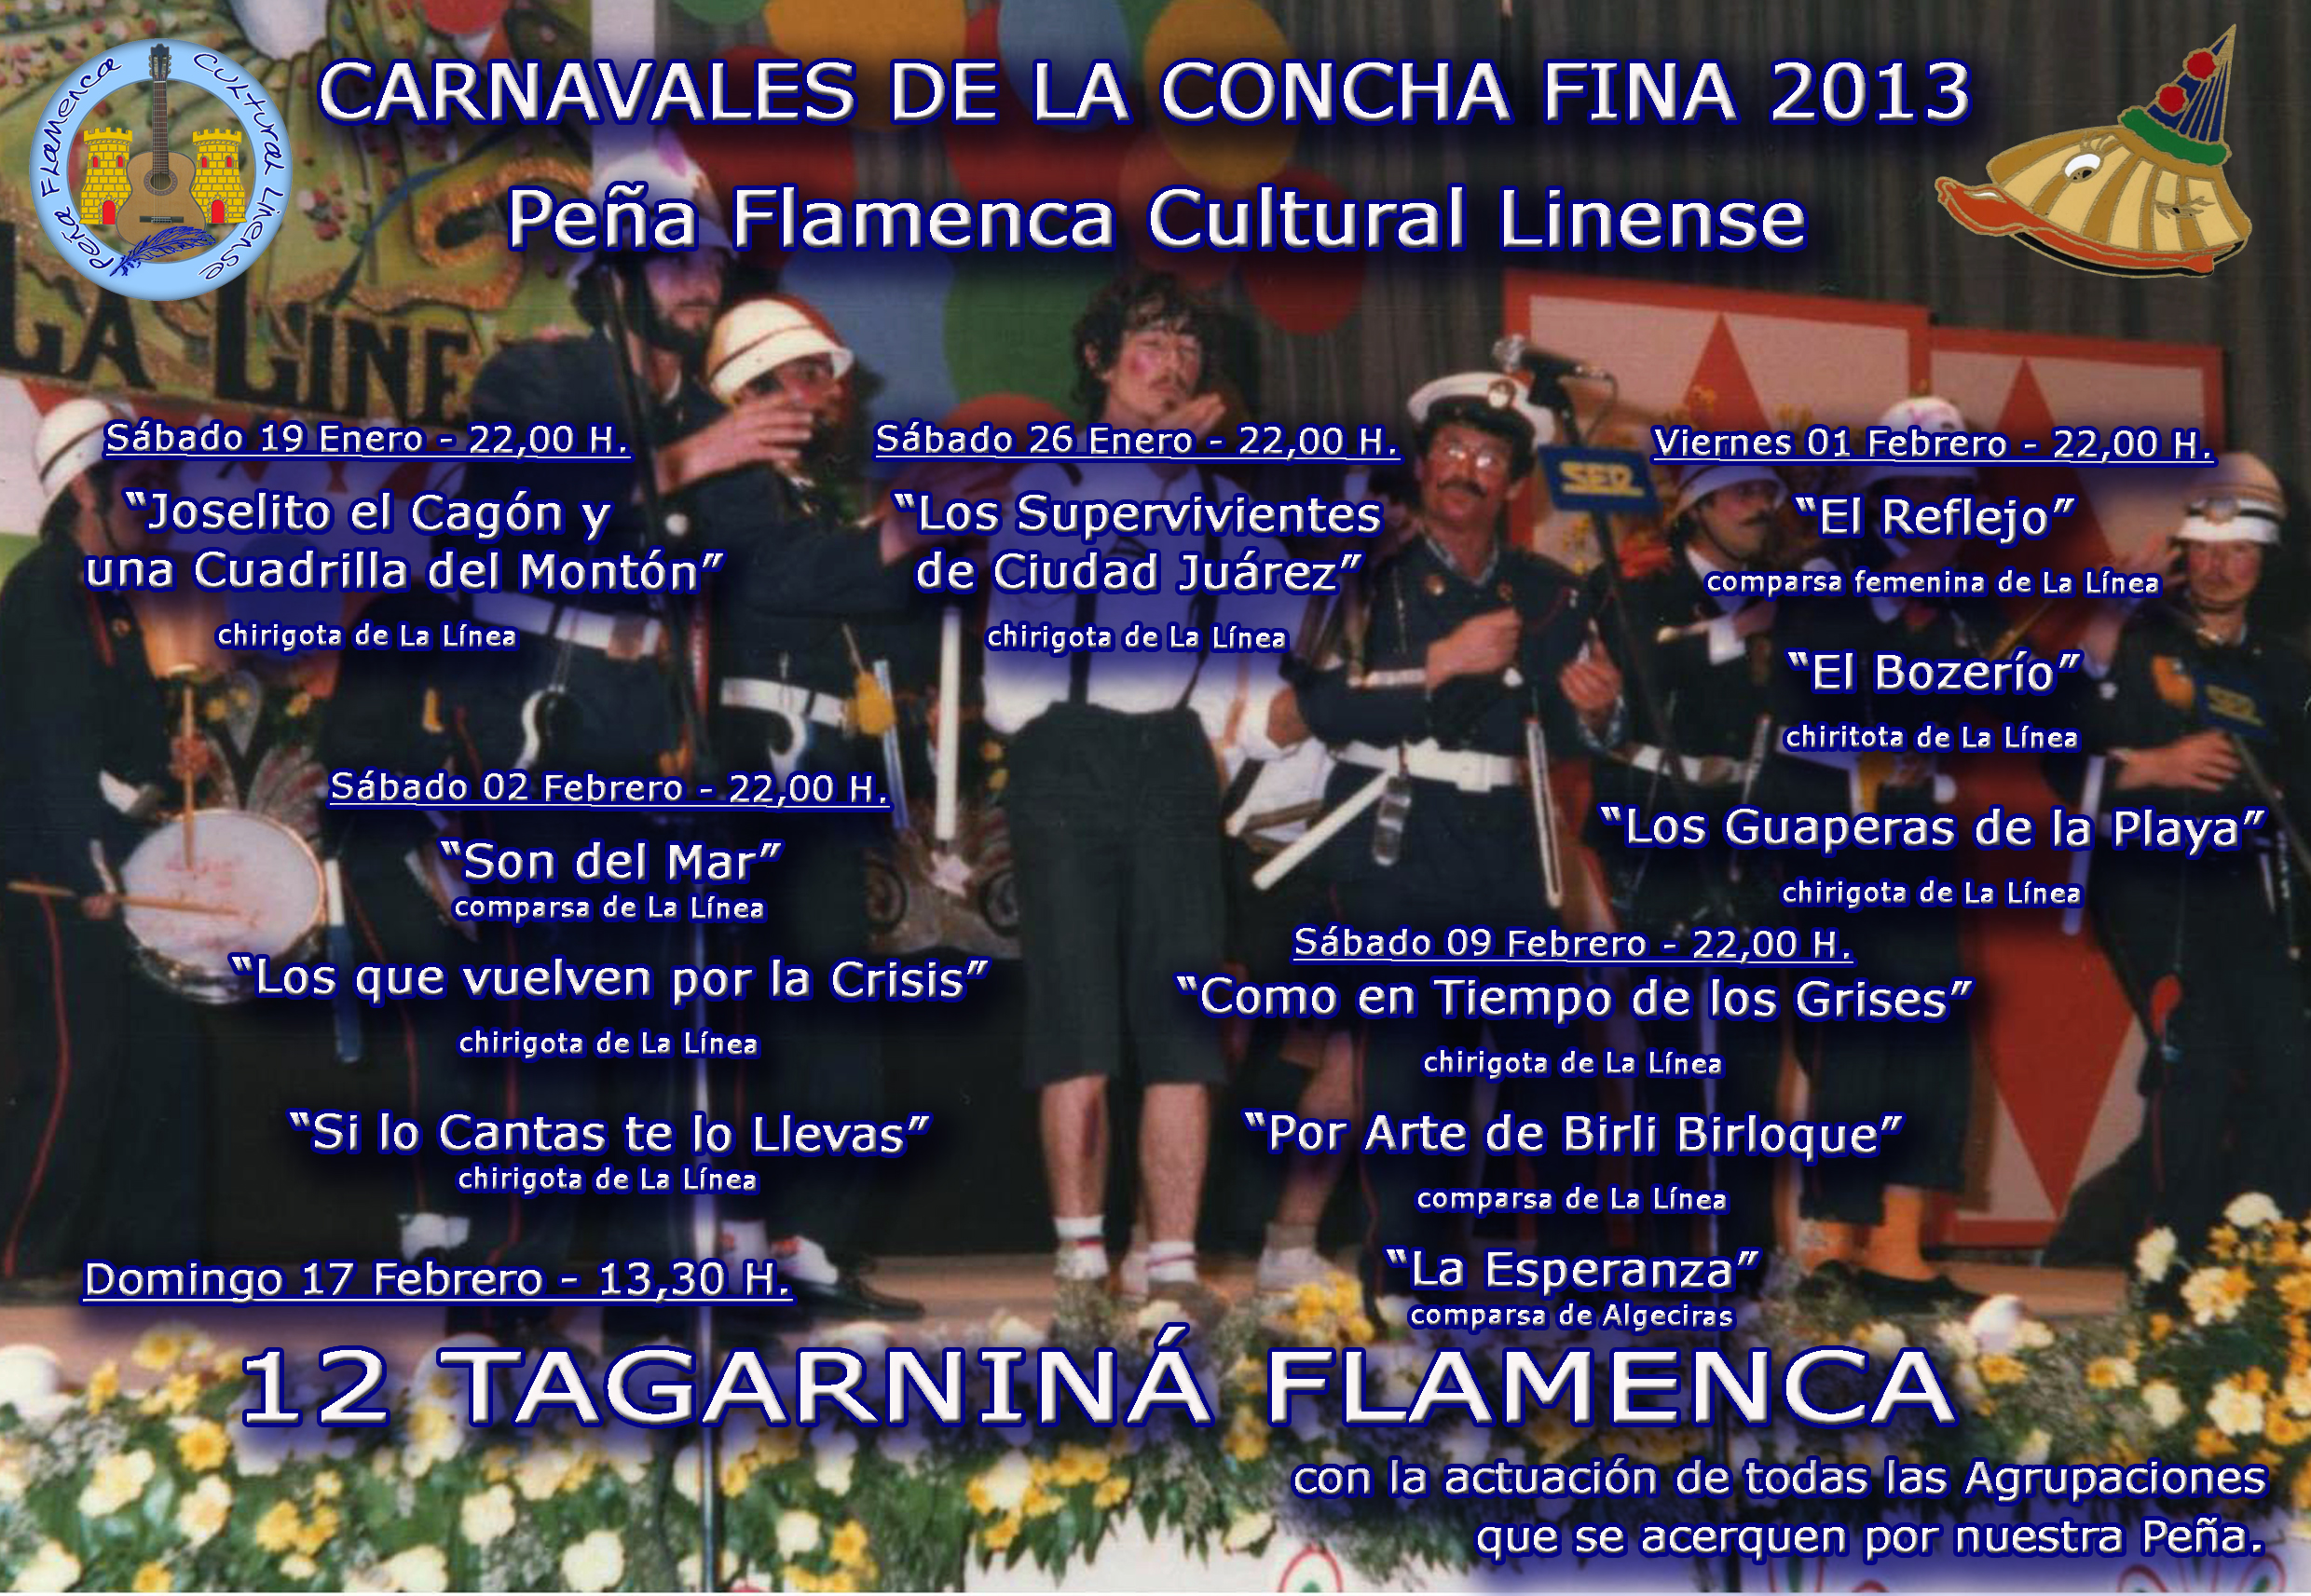 (2) CARNAVALES 2013 PEÑA FLAMENCA CULTURAL LINENSE